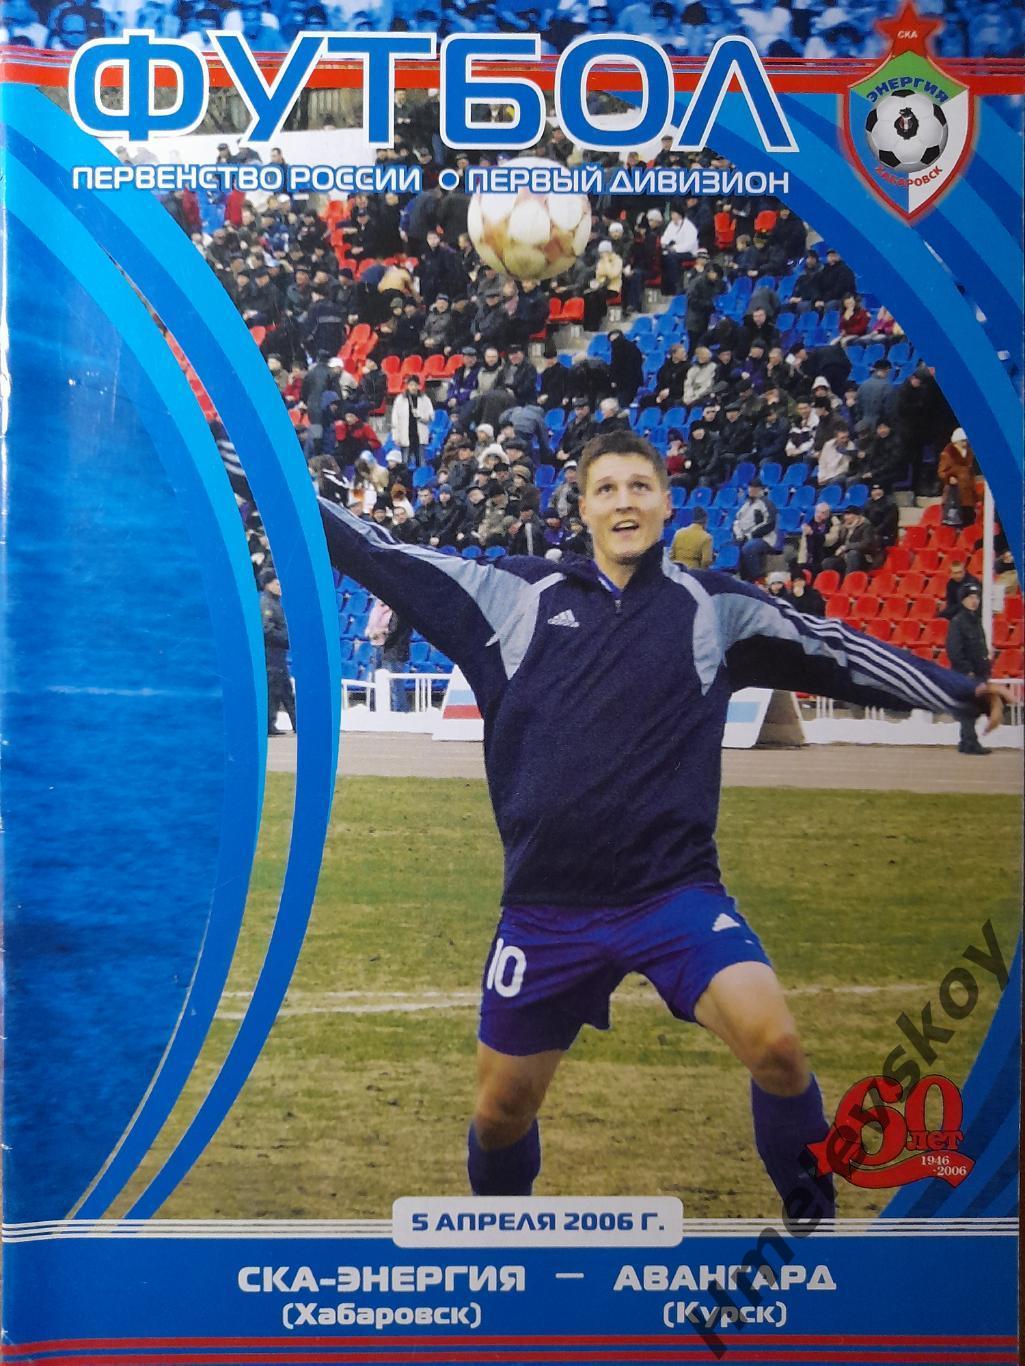 СКА-Энергия Хабаровск - Авангард Курск, 1-й дивизион, 05.04.2006 г.